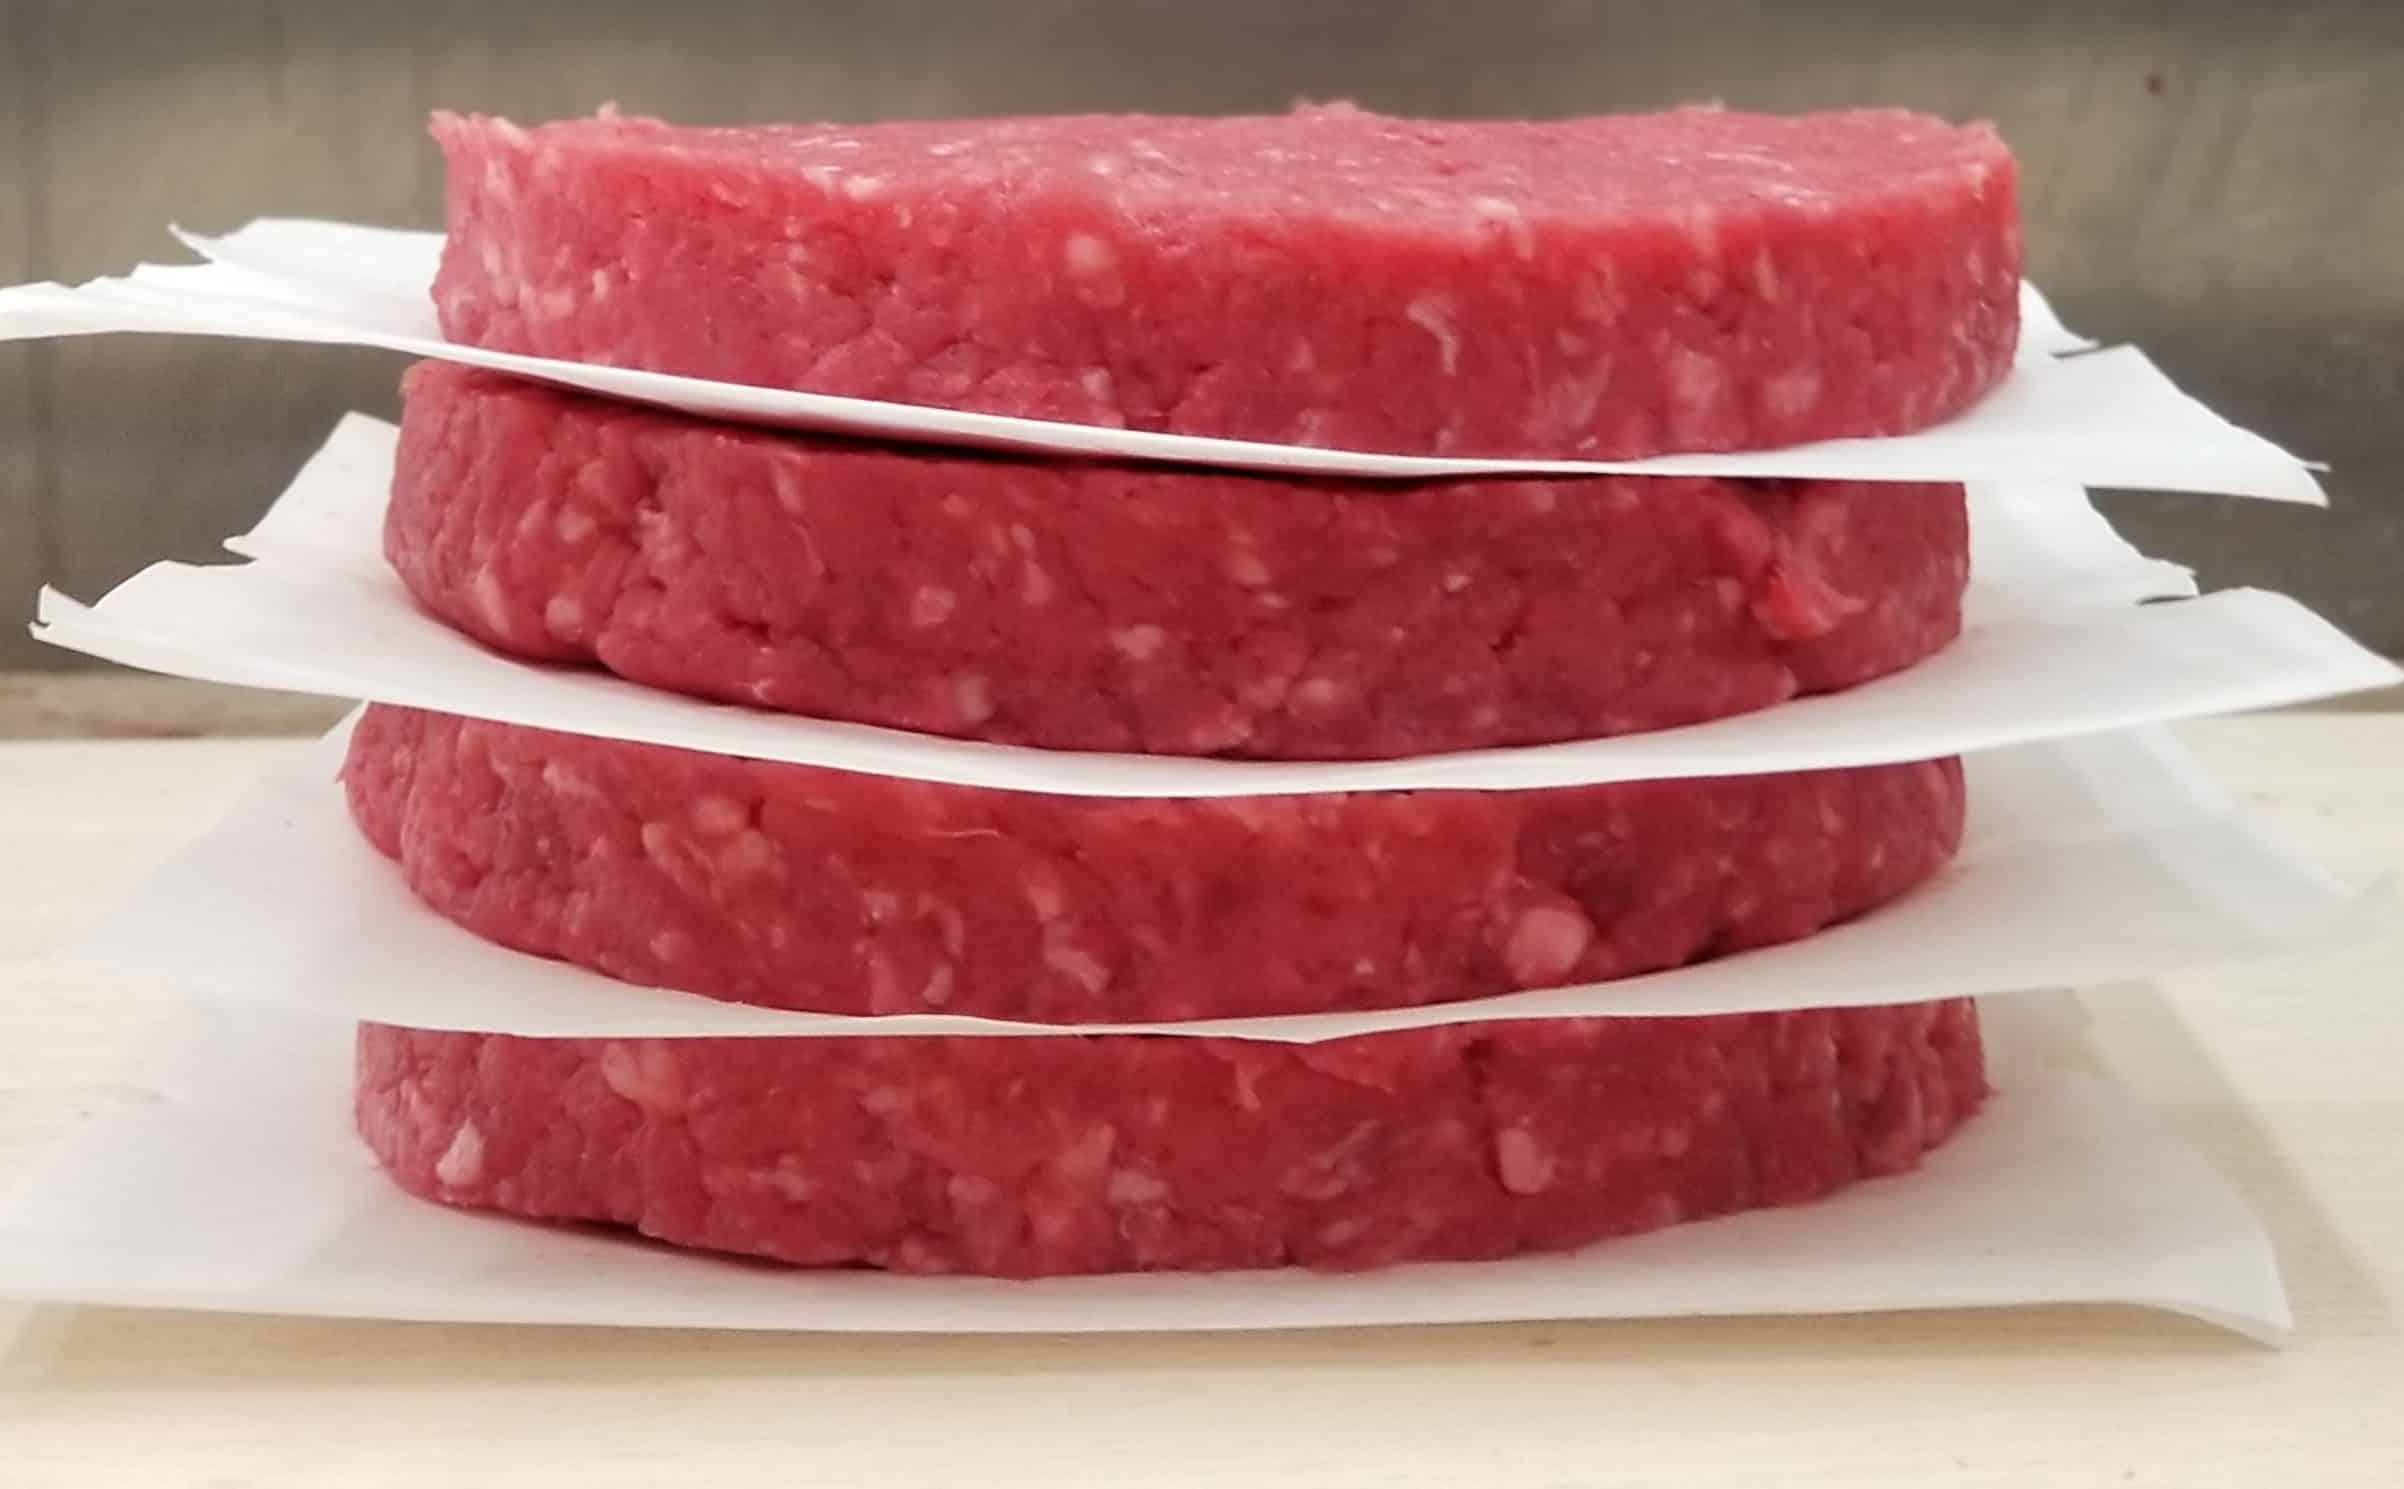 USDA PRIME HAMBURGER PATTIES (PACK OF 2) - 6 oz. 50/50 Bacon Beef Blend